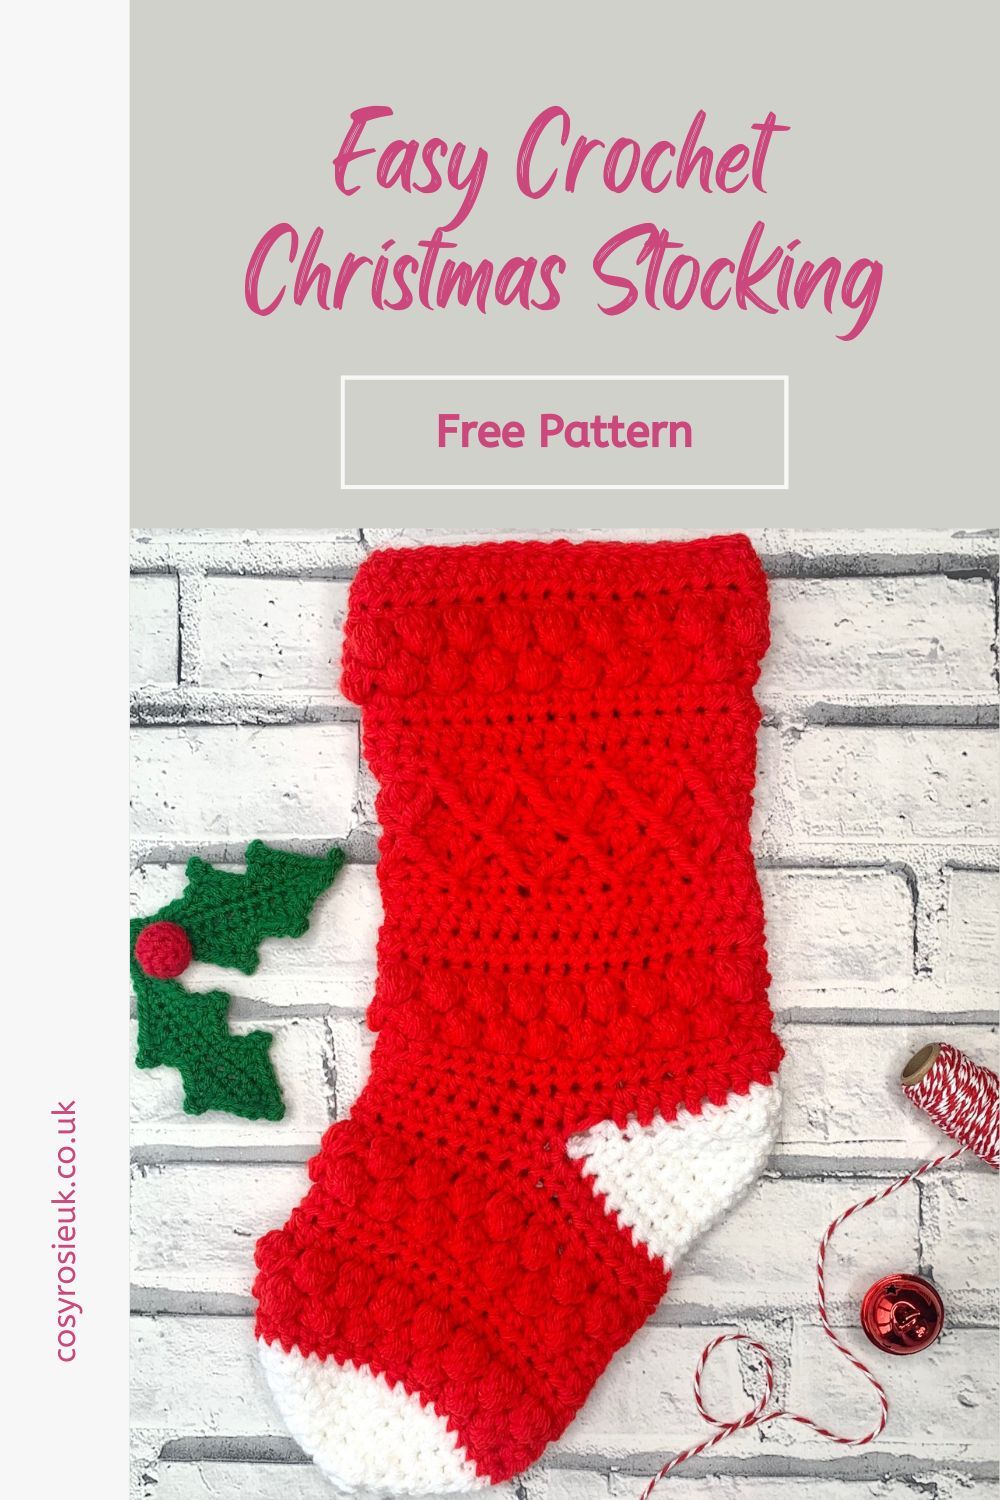 Easy Crochet Christmas Stocking Pattern free